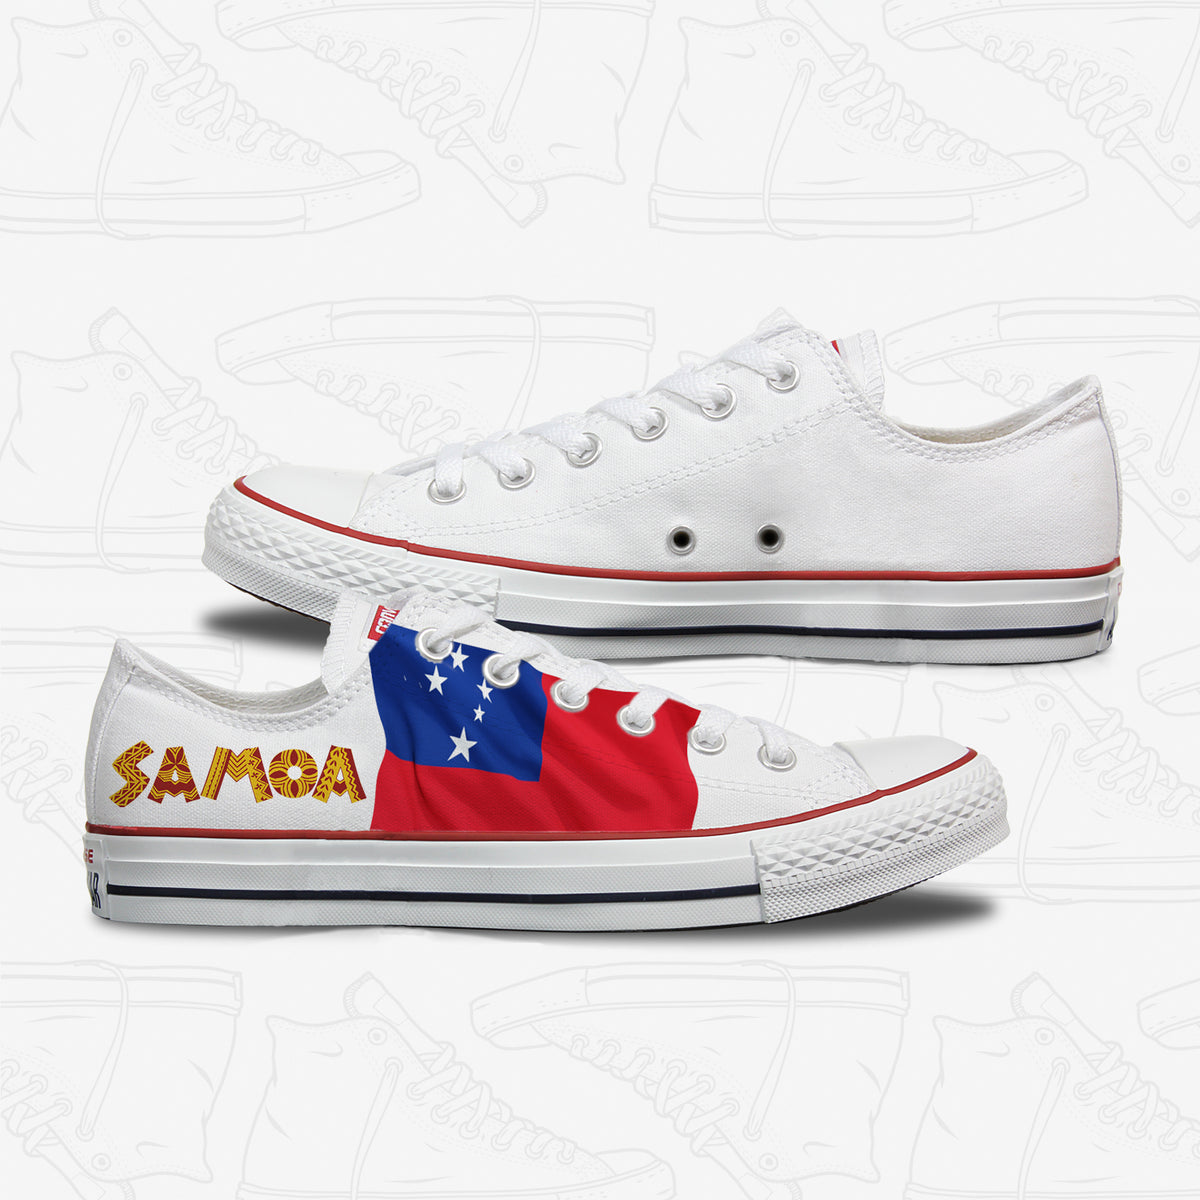 Samoa Adult Custom Converse Shoes